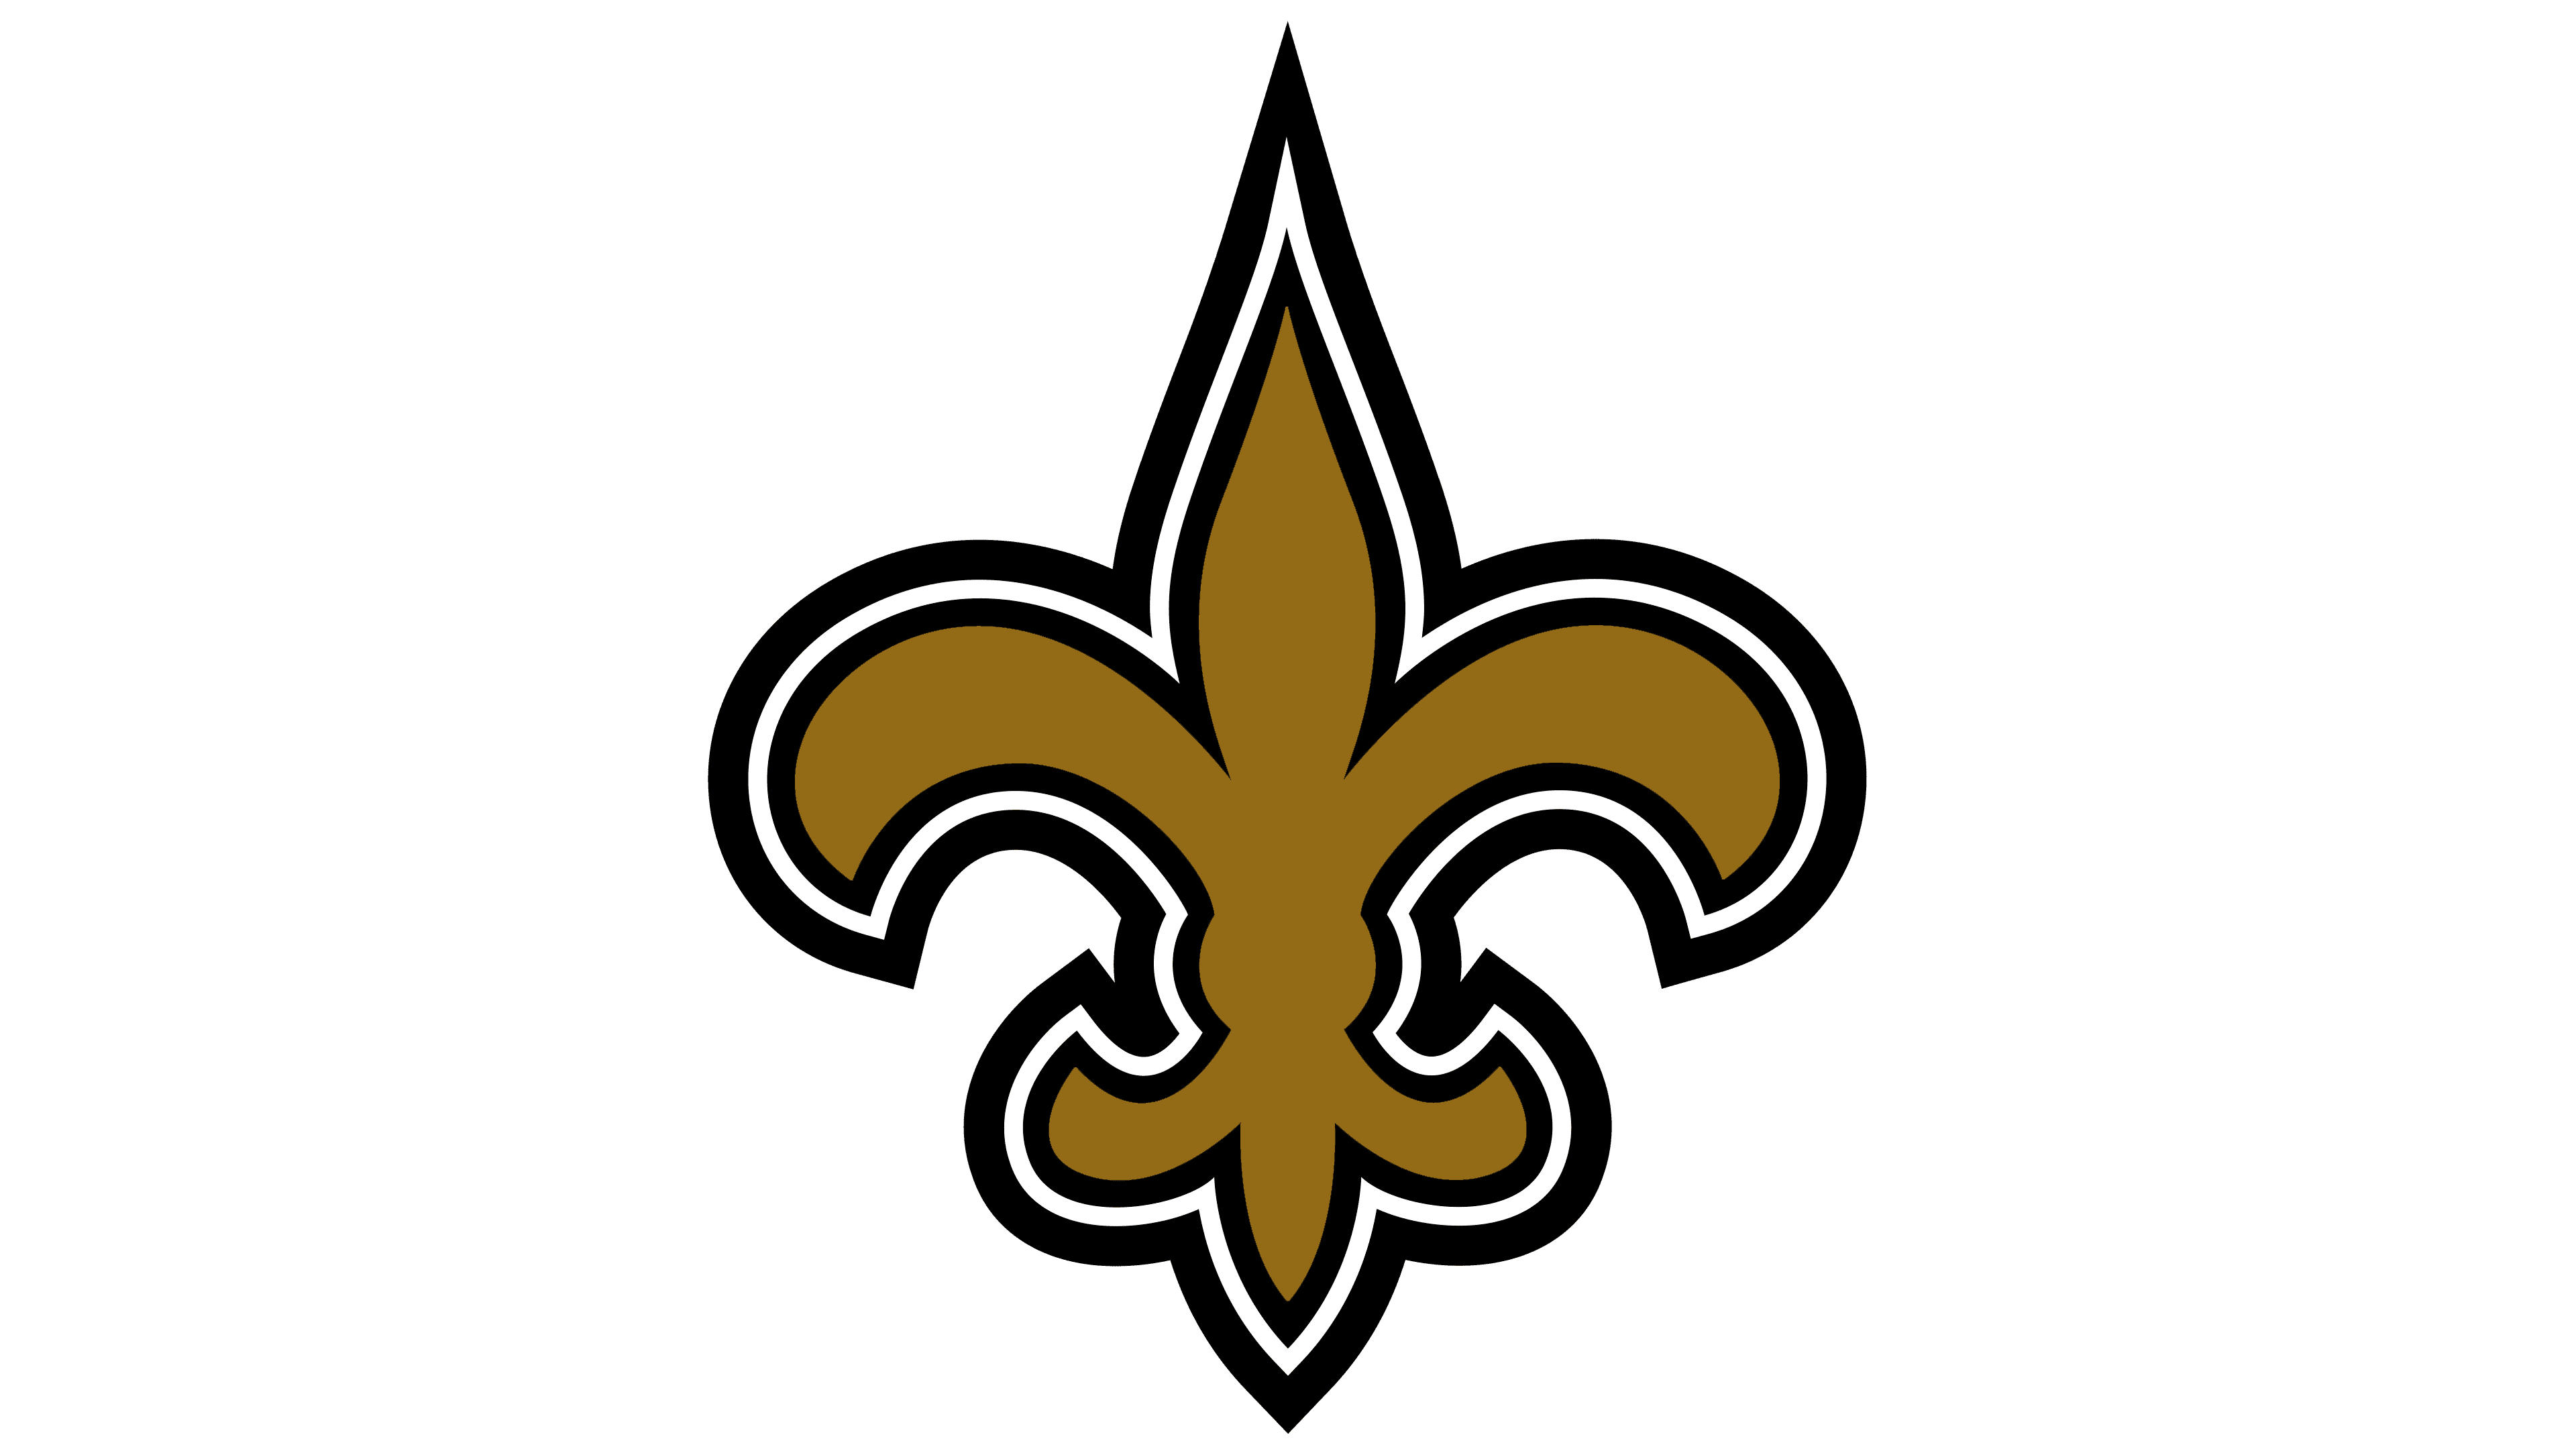 New Orleans Saints Logo Png Transparent Svg Vector Freebie Supply Images